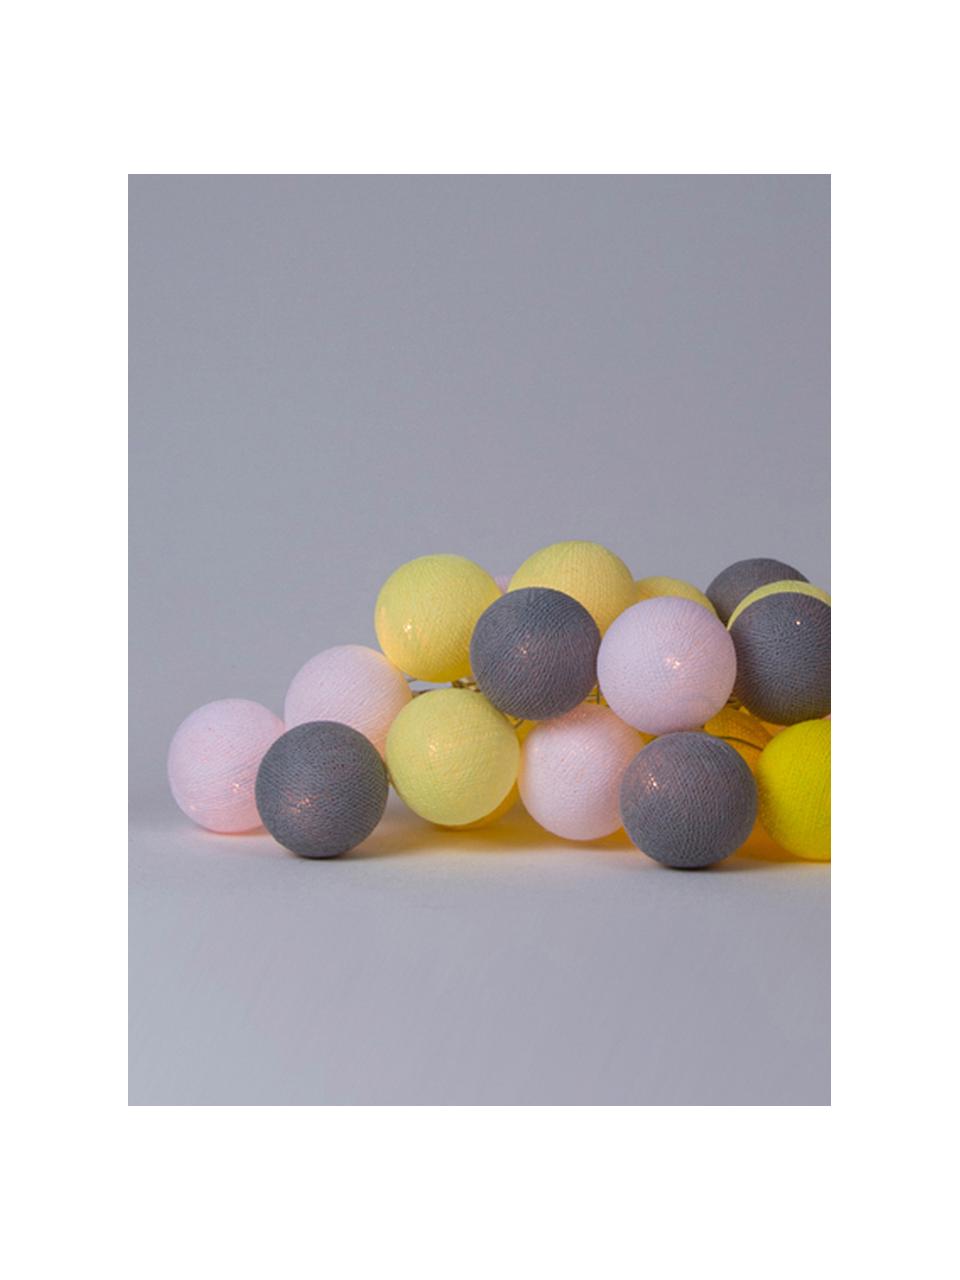 Ghirlanda  a LED Colorain, Giallo, bianco, tonalità grigie, Lung. 264 cm